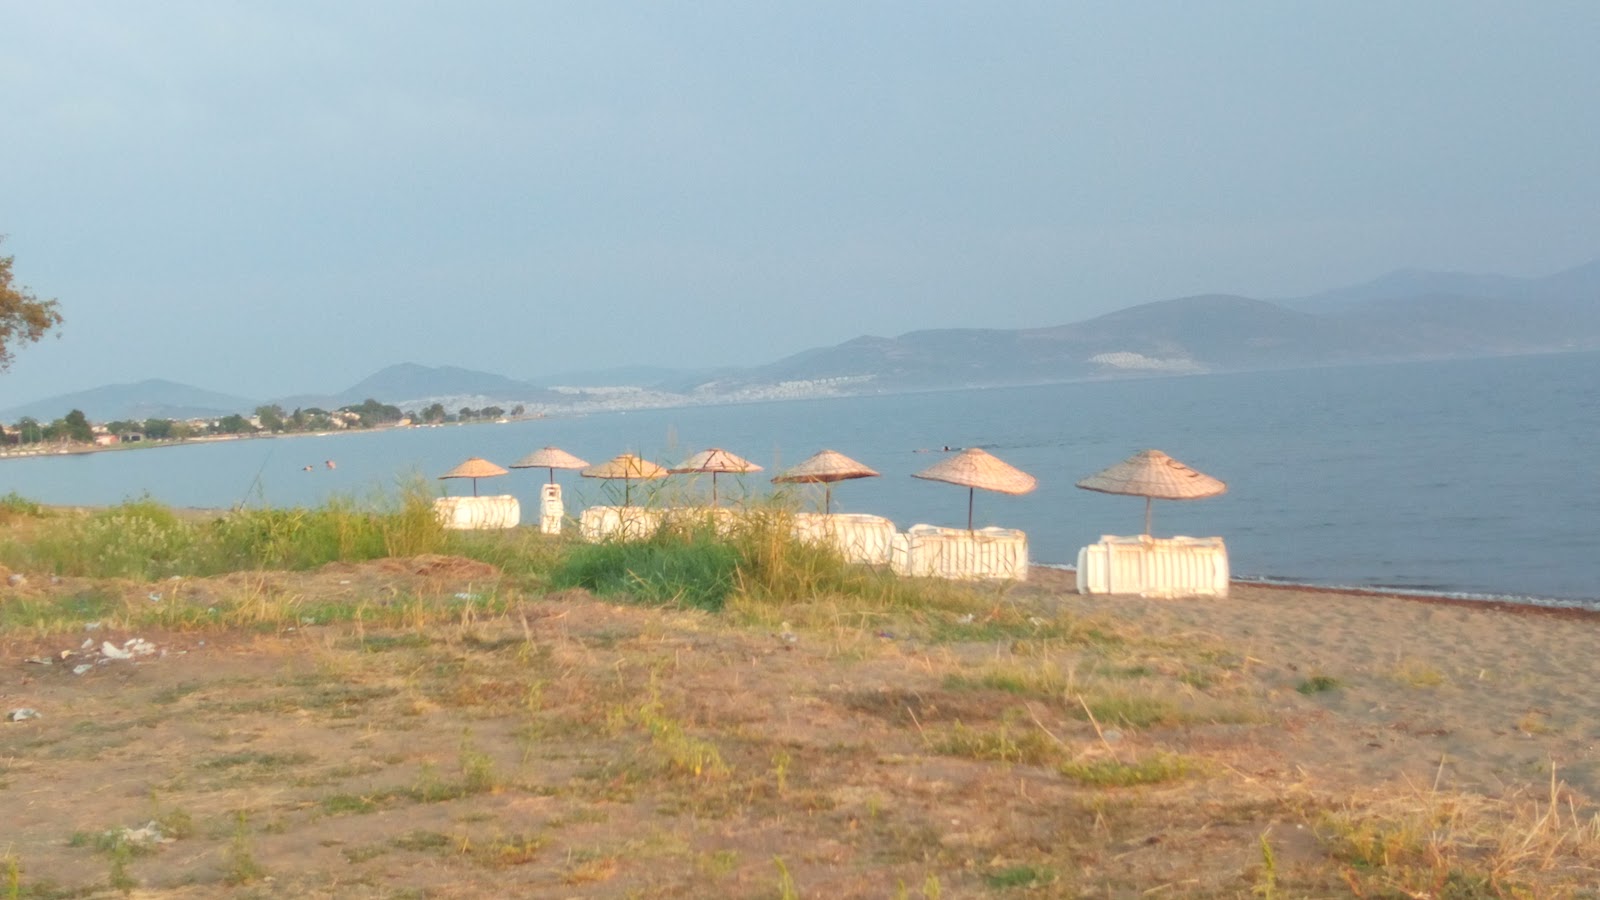 Tek Cinar beach的照片 带有碧绿色水表面